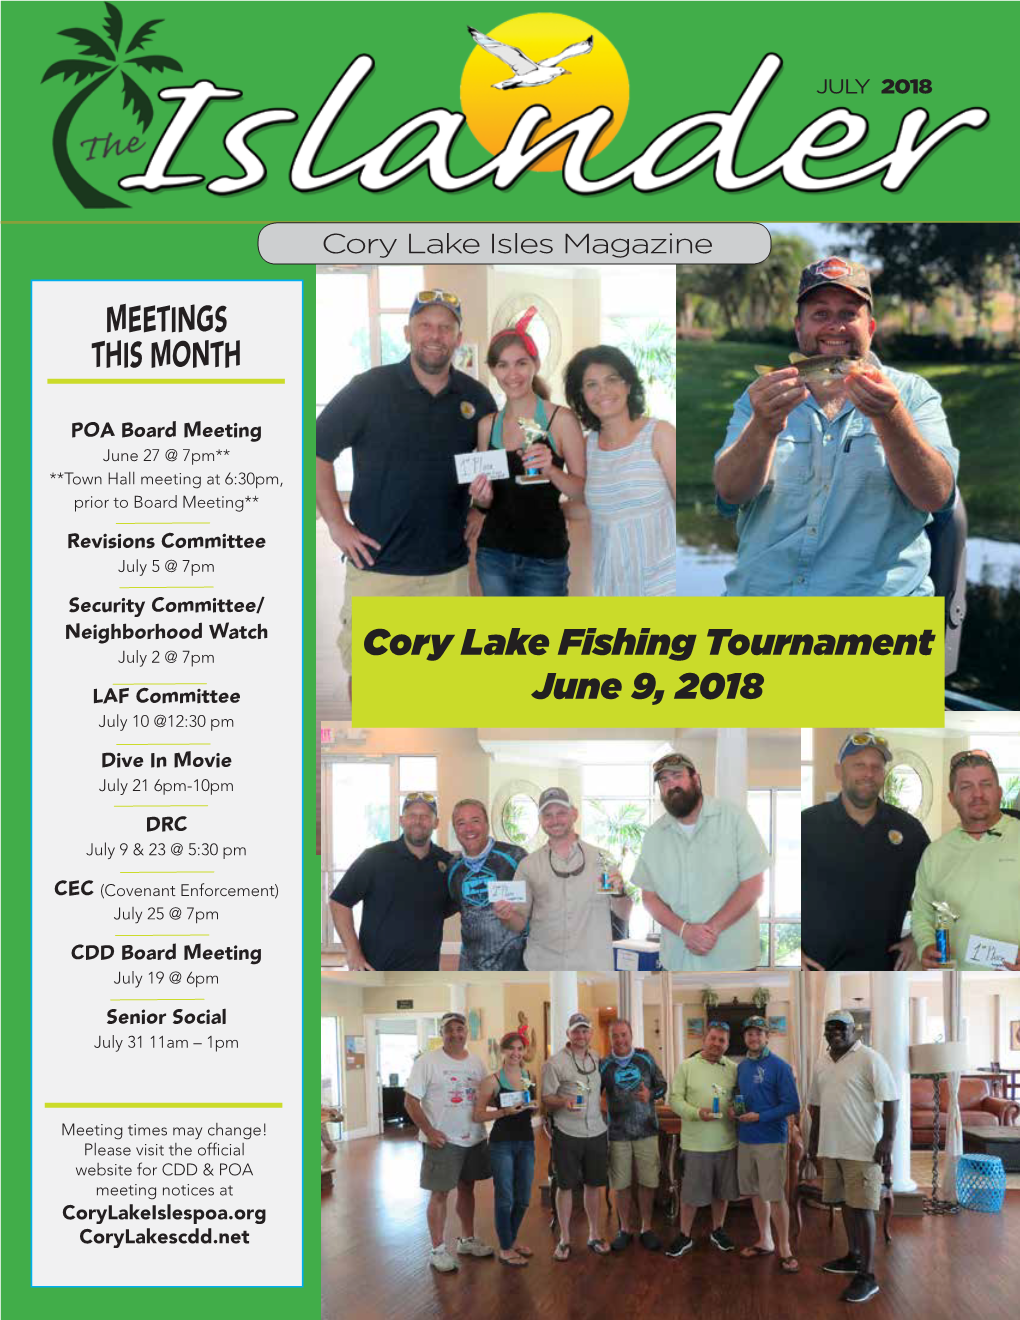 Cory Lake Fishing Tournament June 9, 2018